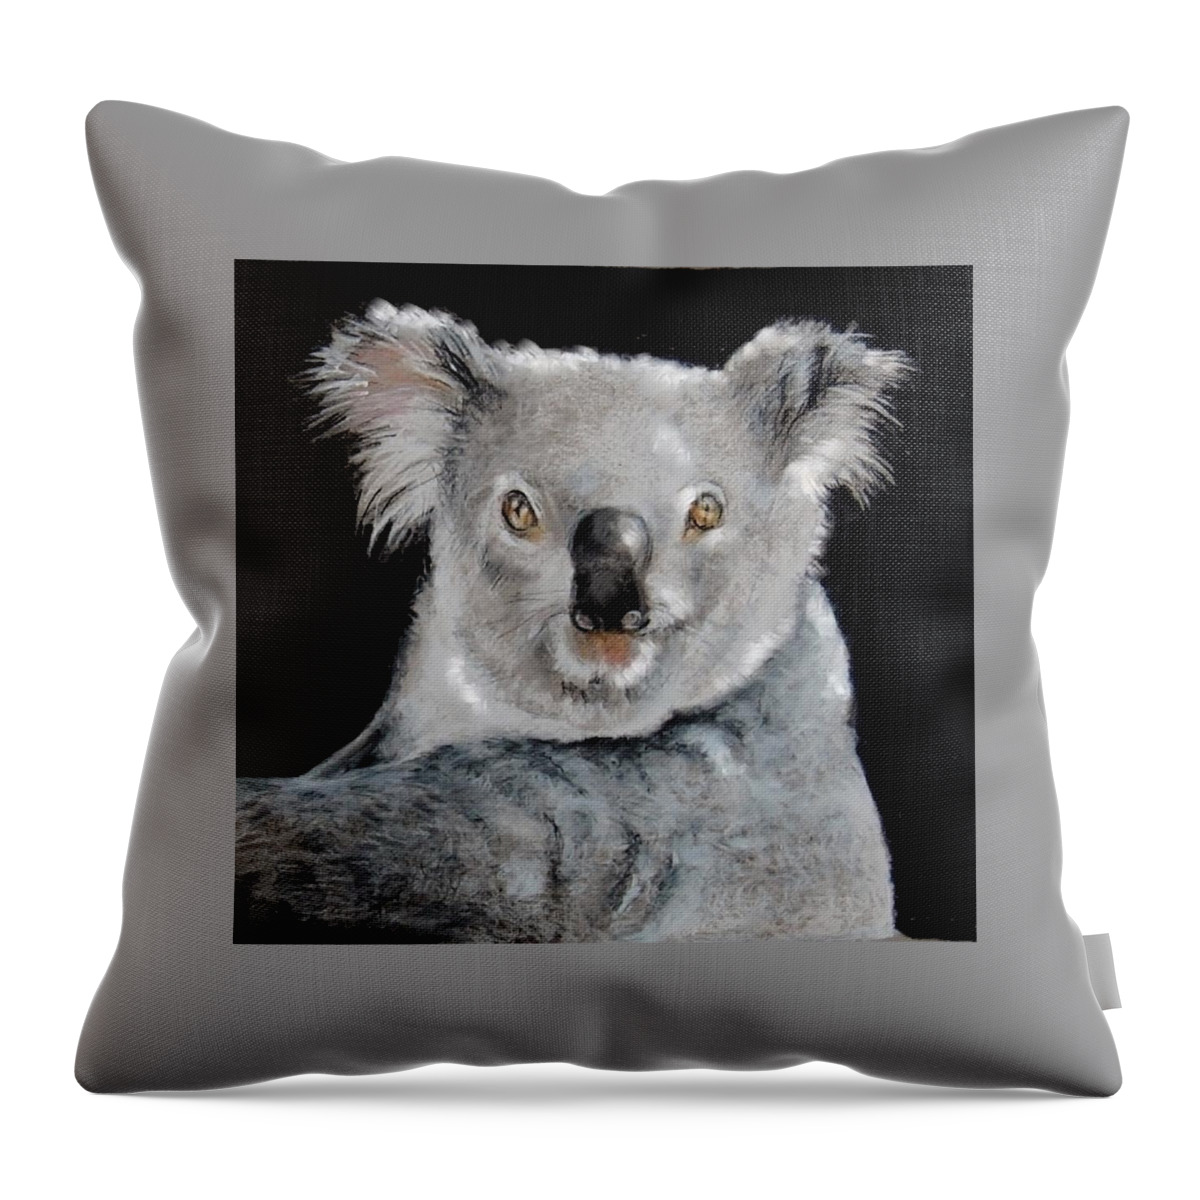 Koala Throw Pillow featuring the drawing Koala by Jean Cormier